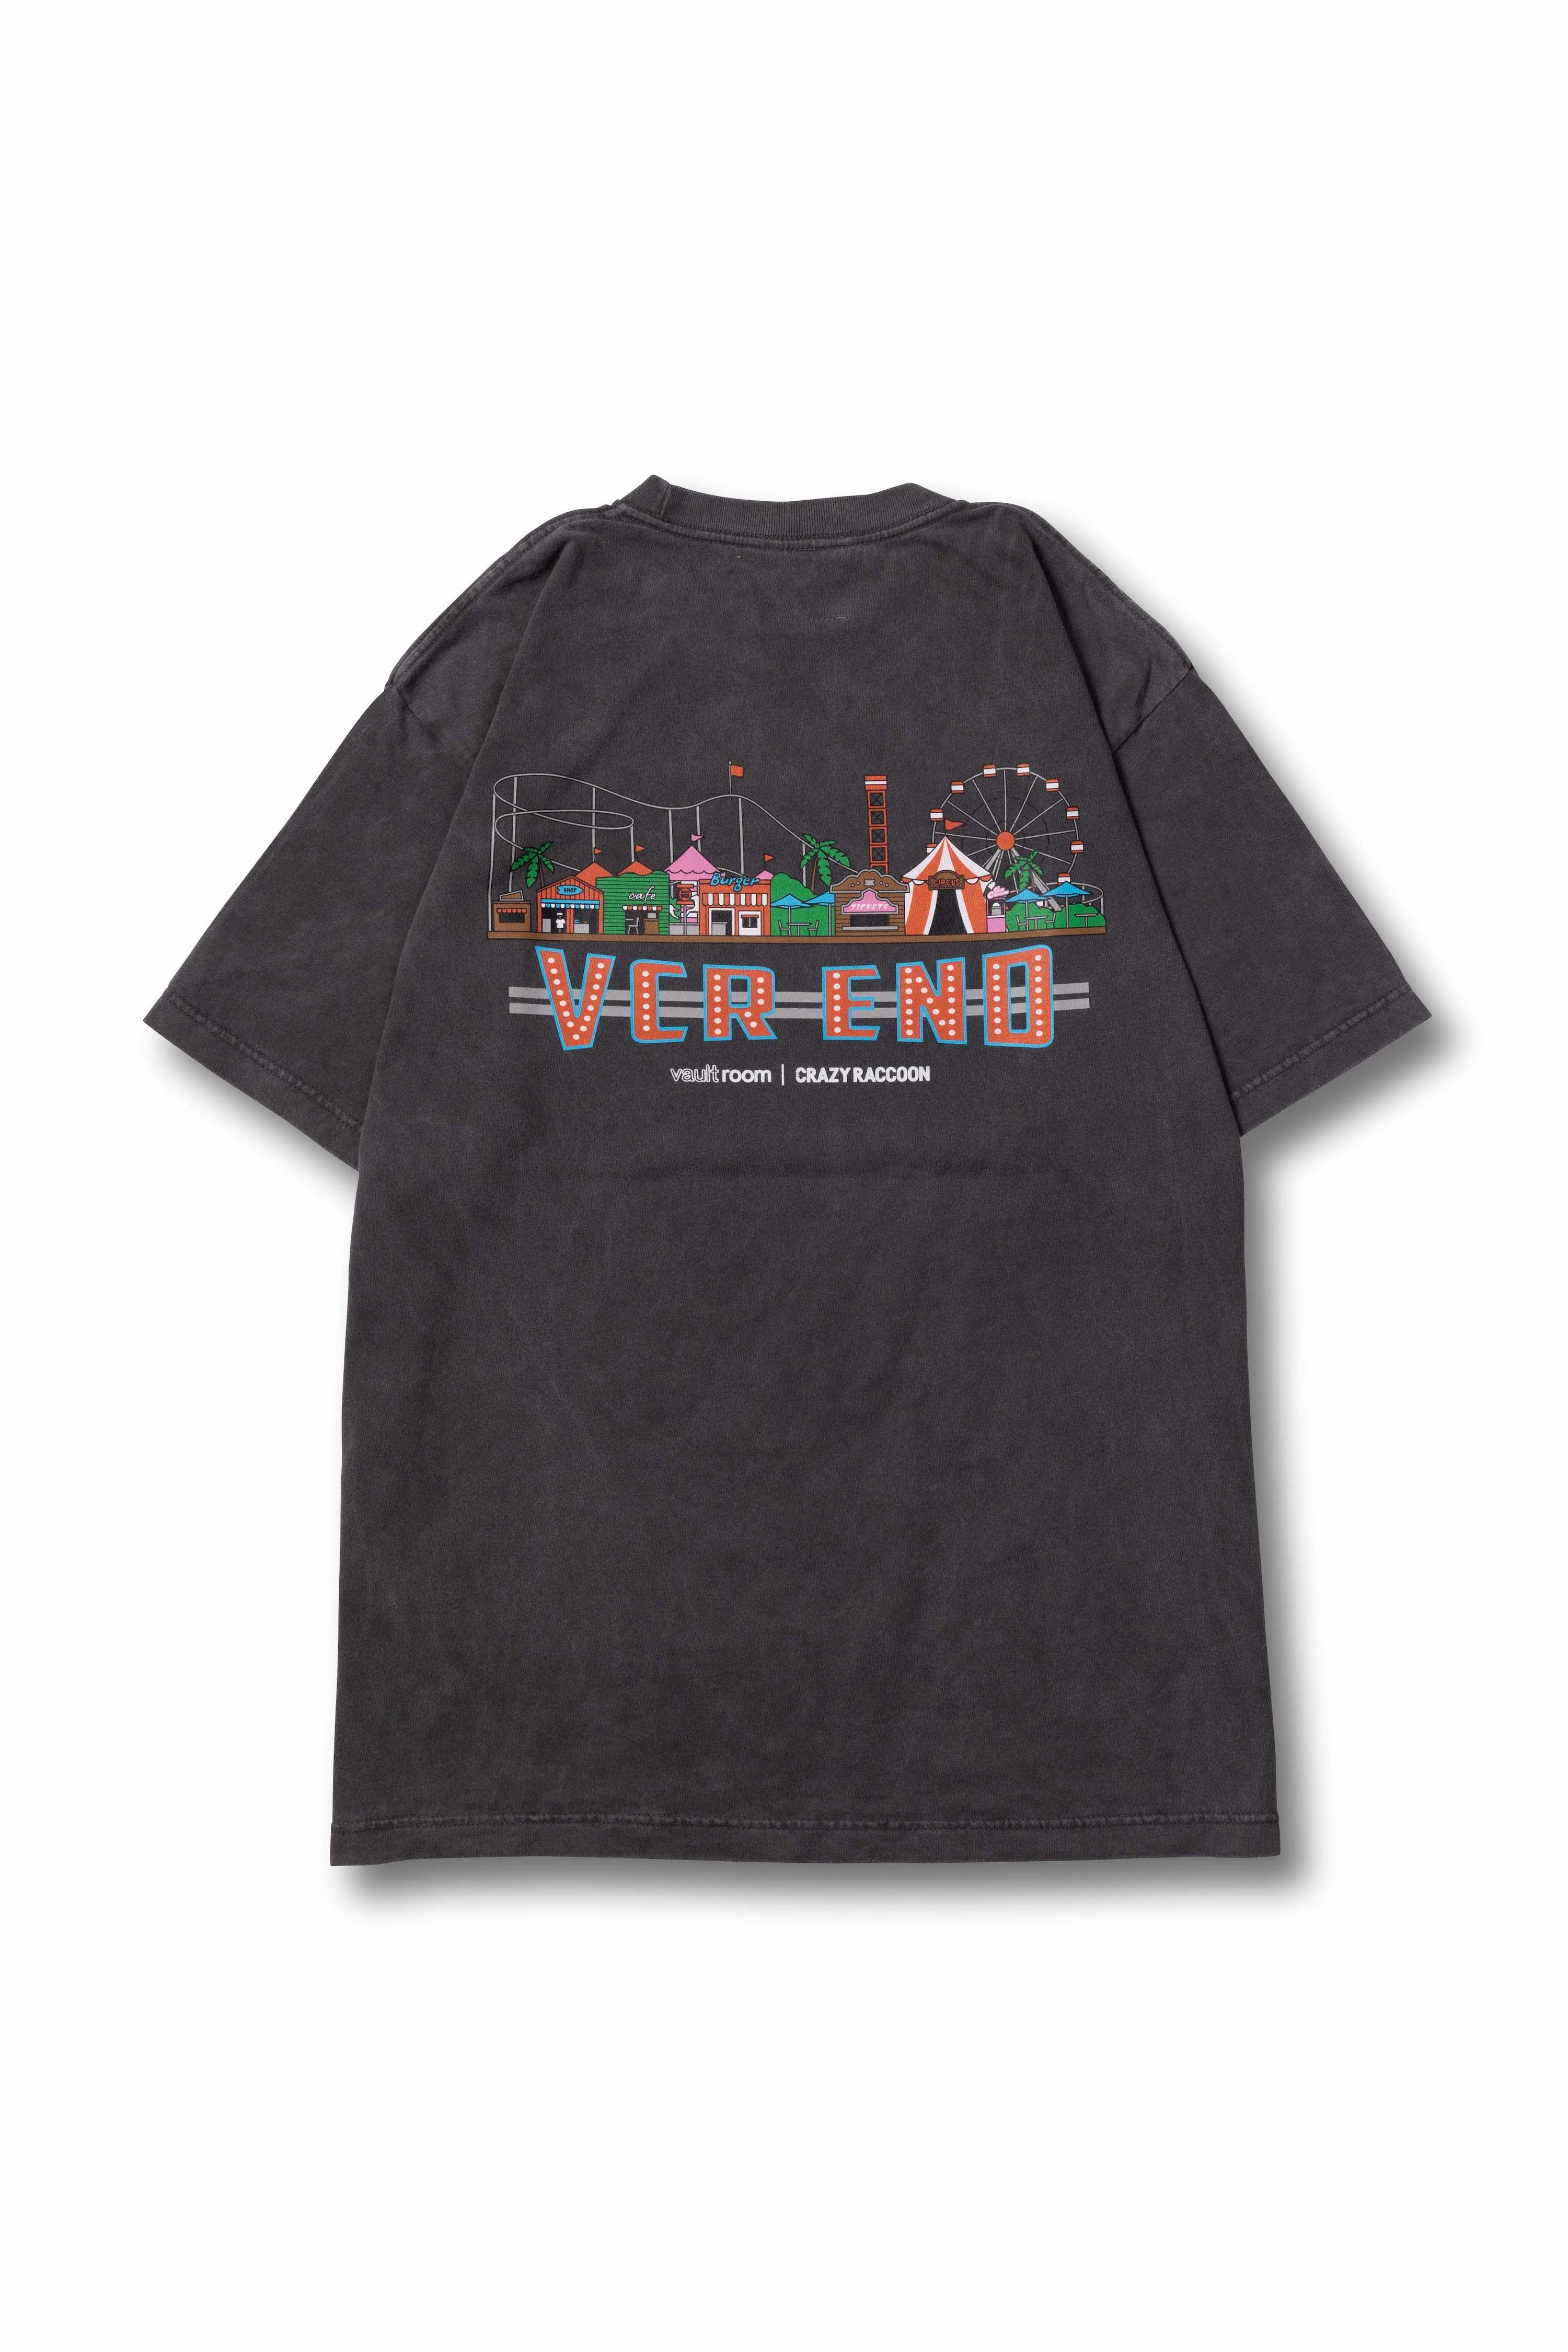 vaultroom AMUSEMENT PARK TEE - Tシャツ/カットソー(半袖/袖なし)